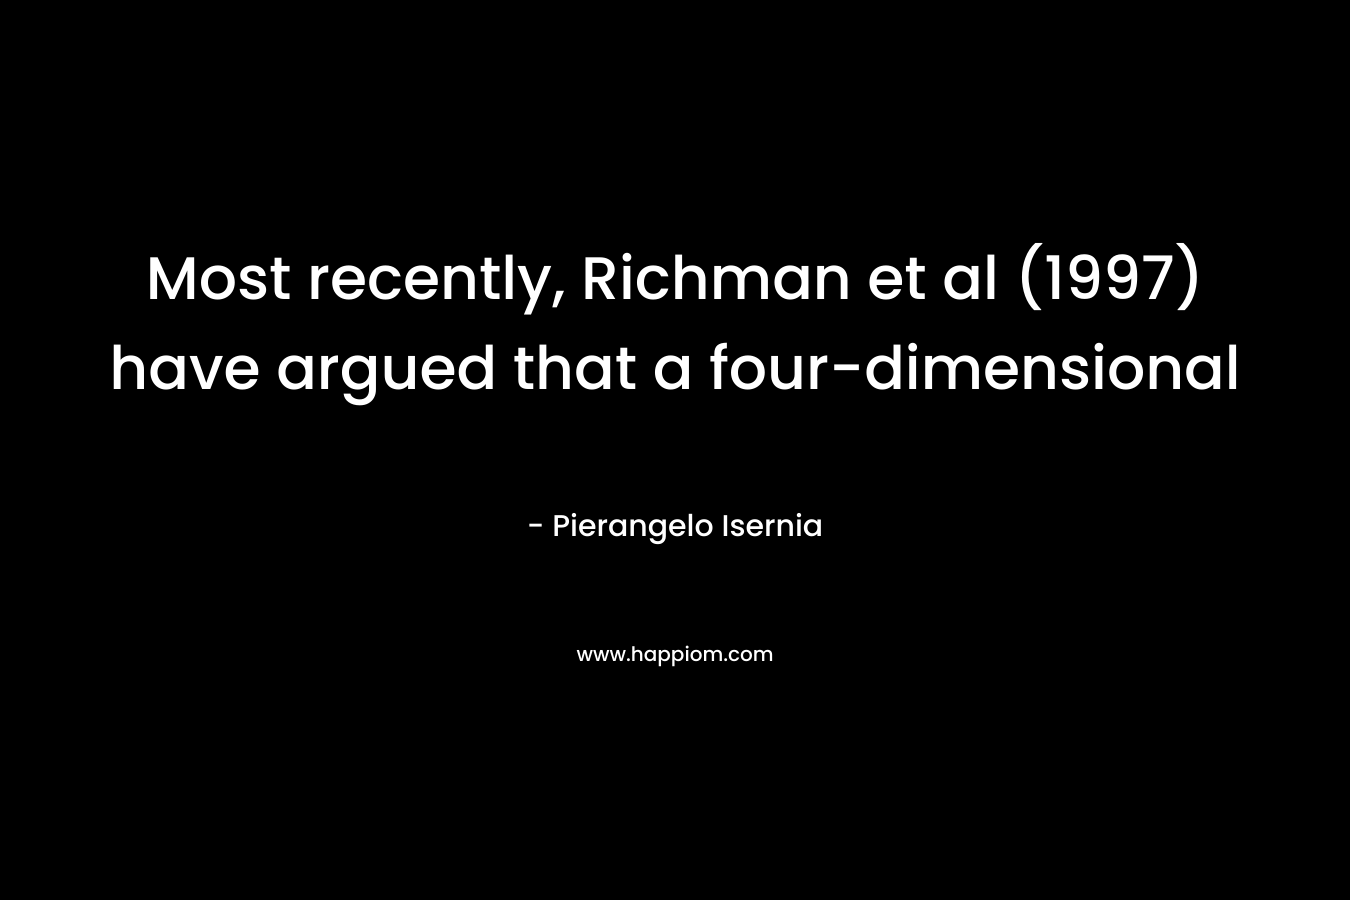 Most recently, Richman et al (1997) have argued that a four-dimensional – Pierangelo Isernia